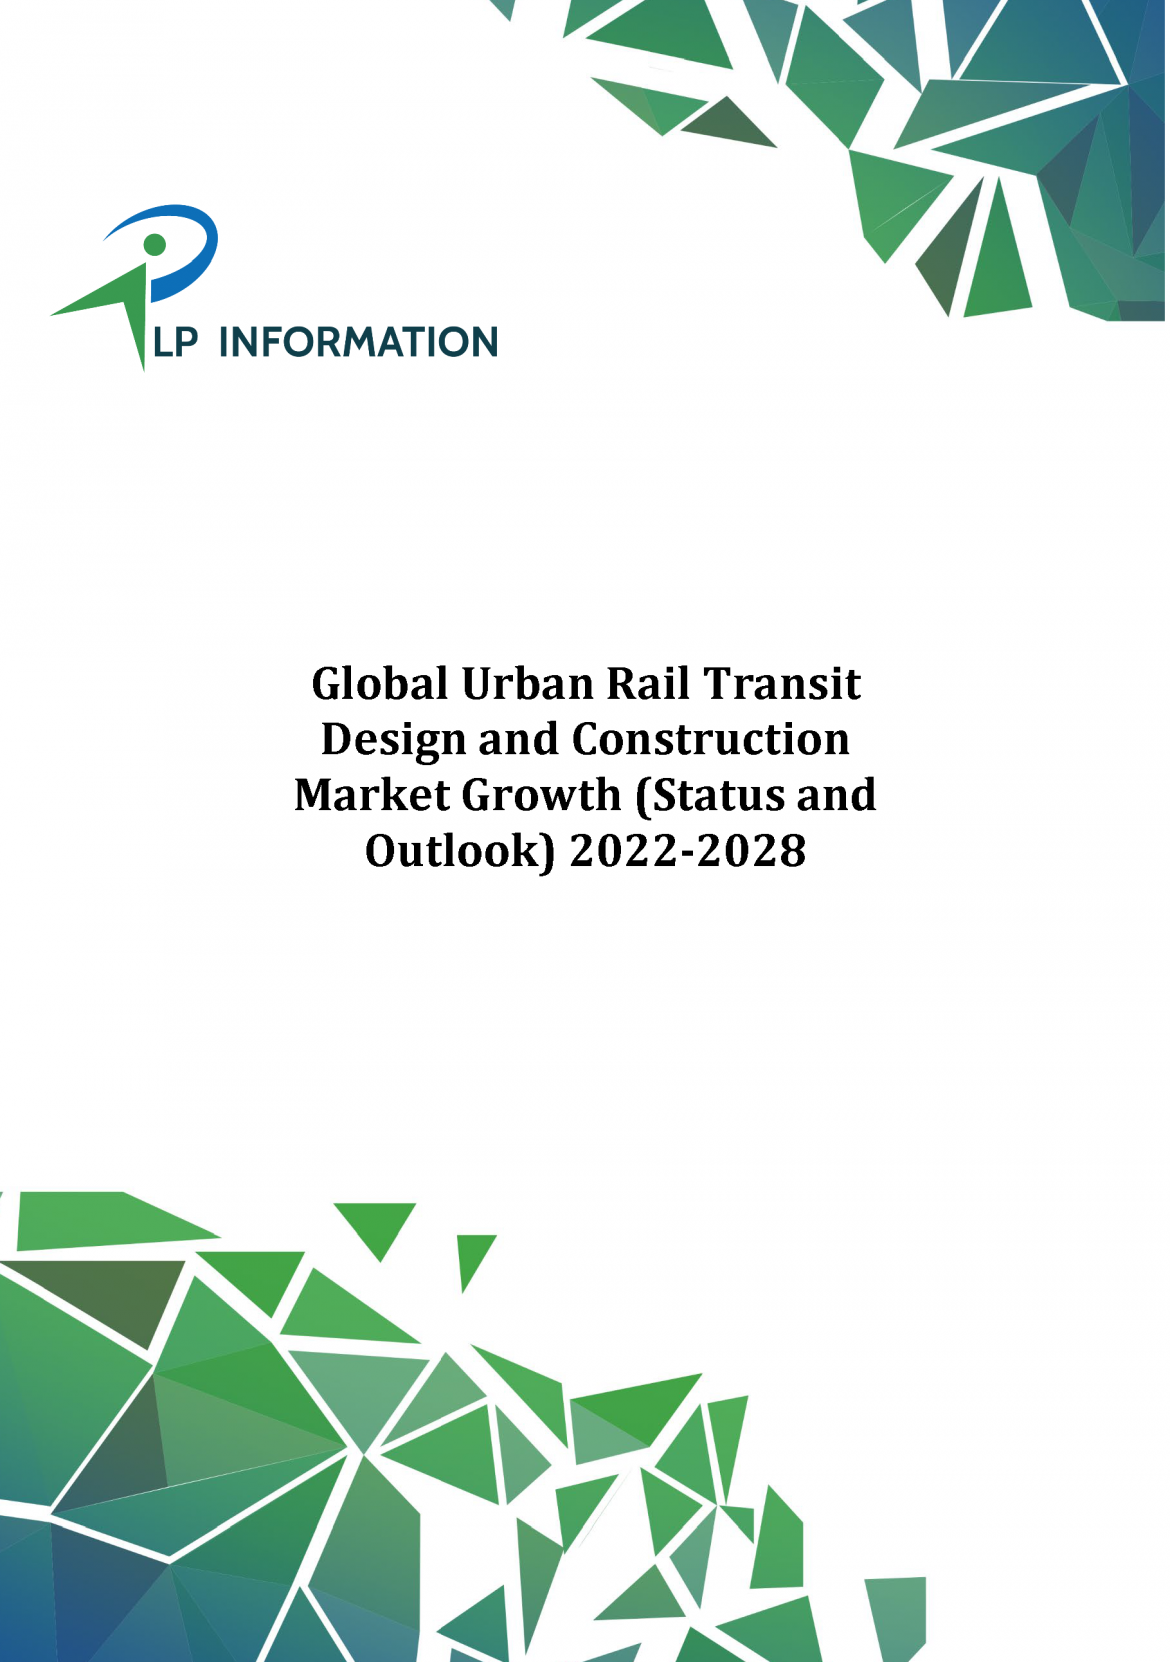 Global Urban Rail Transit Design and Construction Market Growth 2022-2028